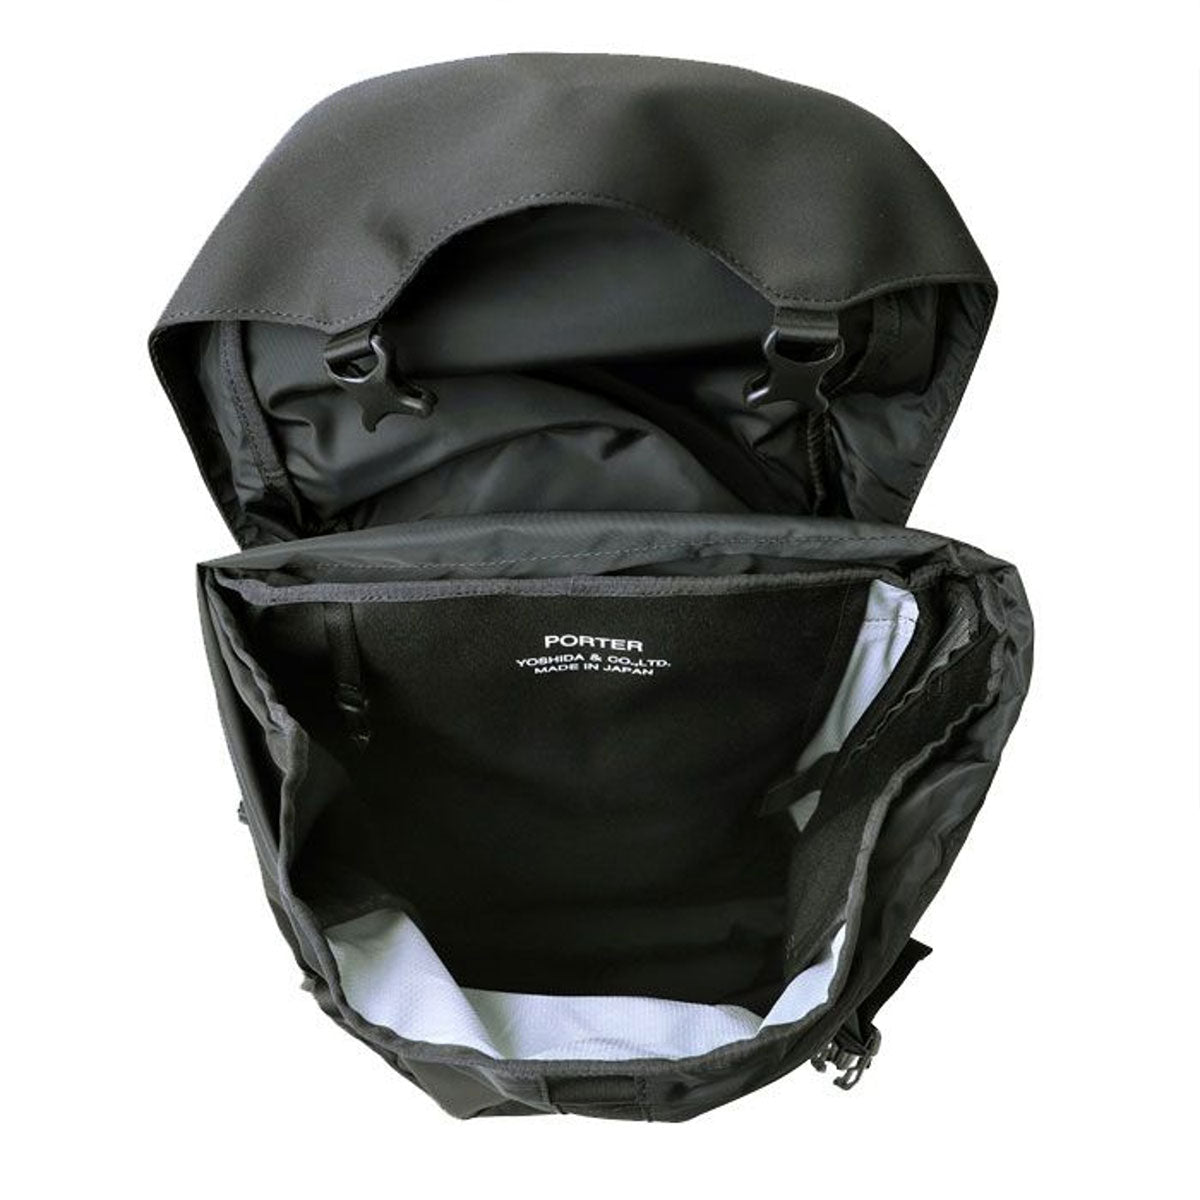 porter-yoshida u0026 co. future backpack (black) 697-05548-10 - a.plus